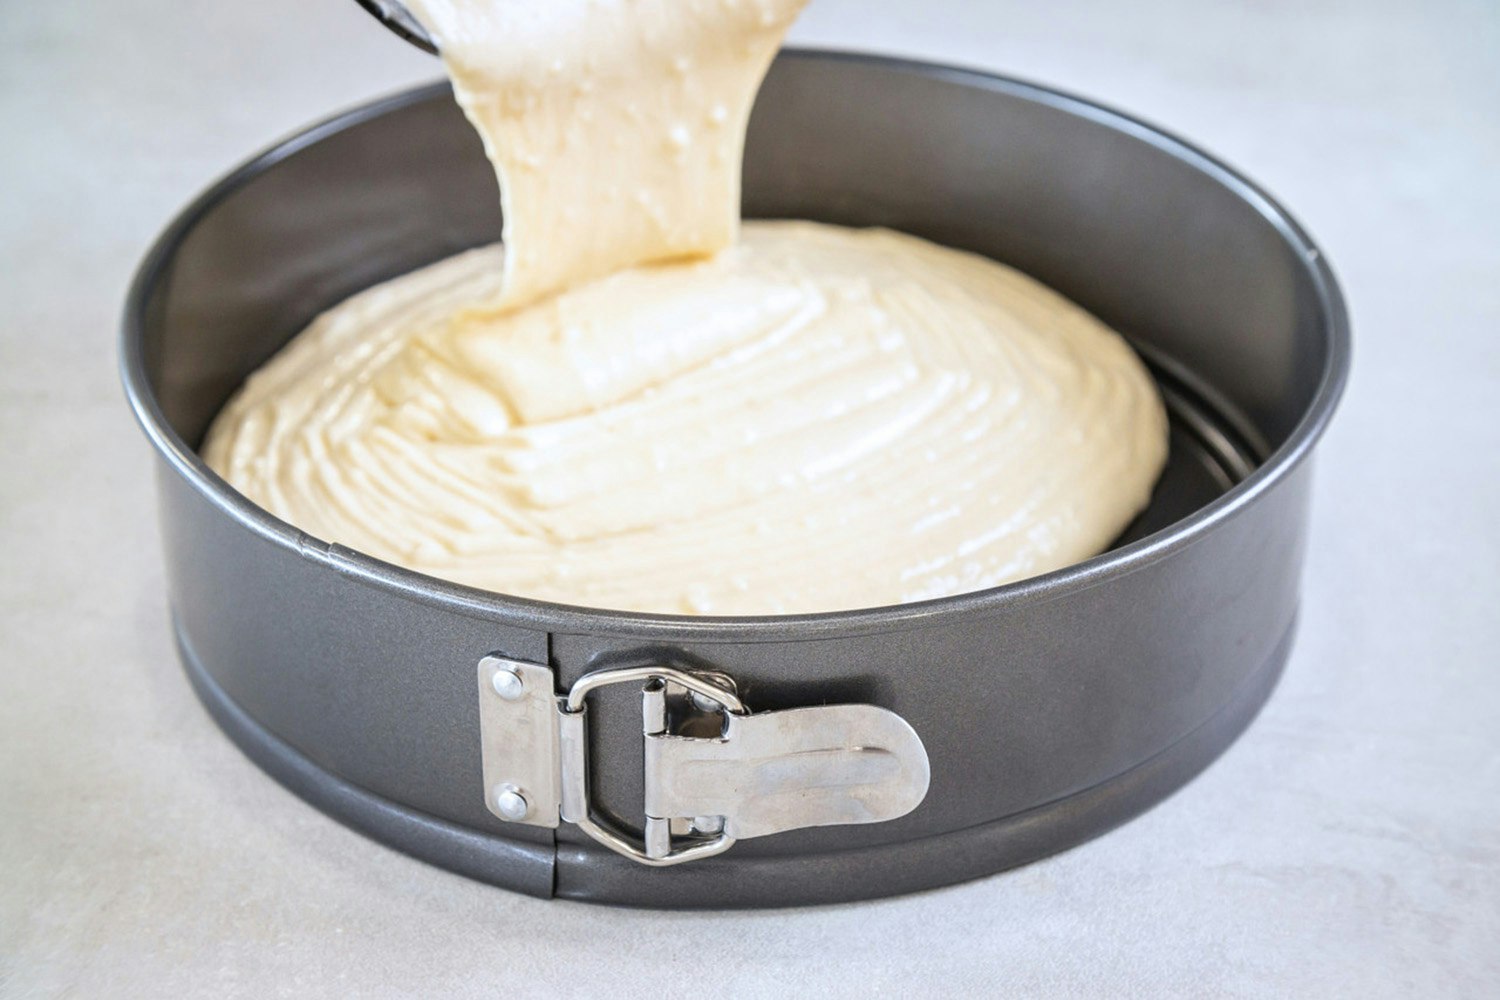 https://royaldesign.com/image/2/kitchen-craft-masterclass-non-stick-spring-form-cake-pan-8